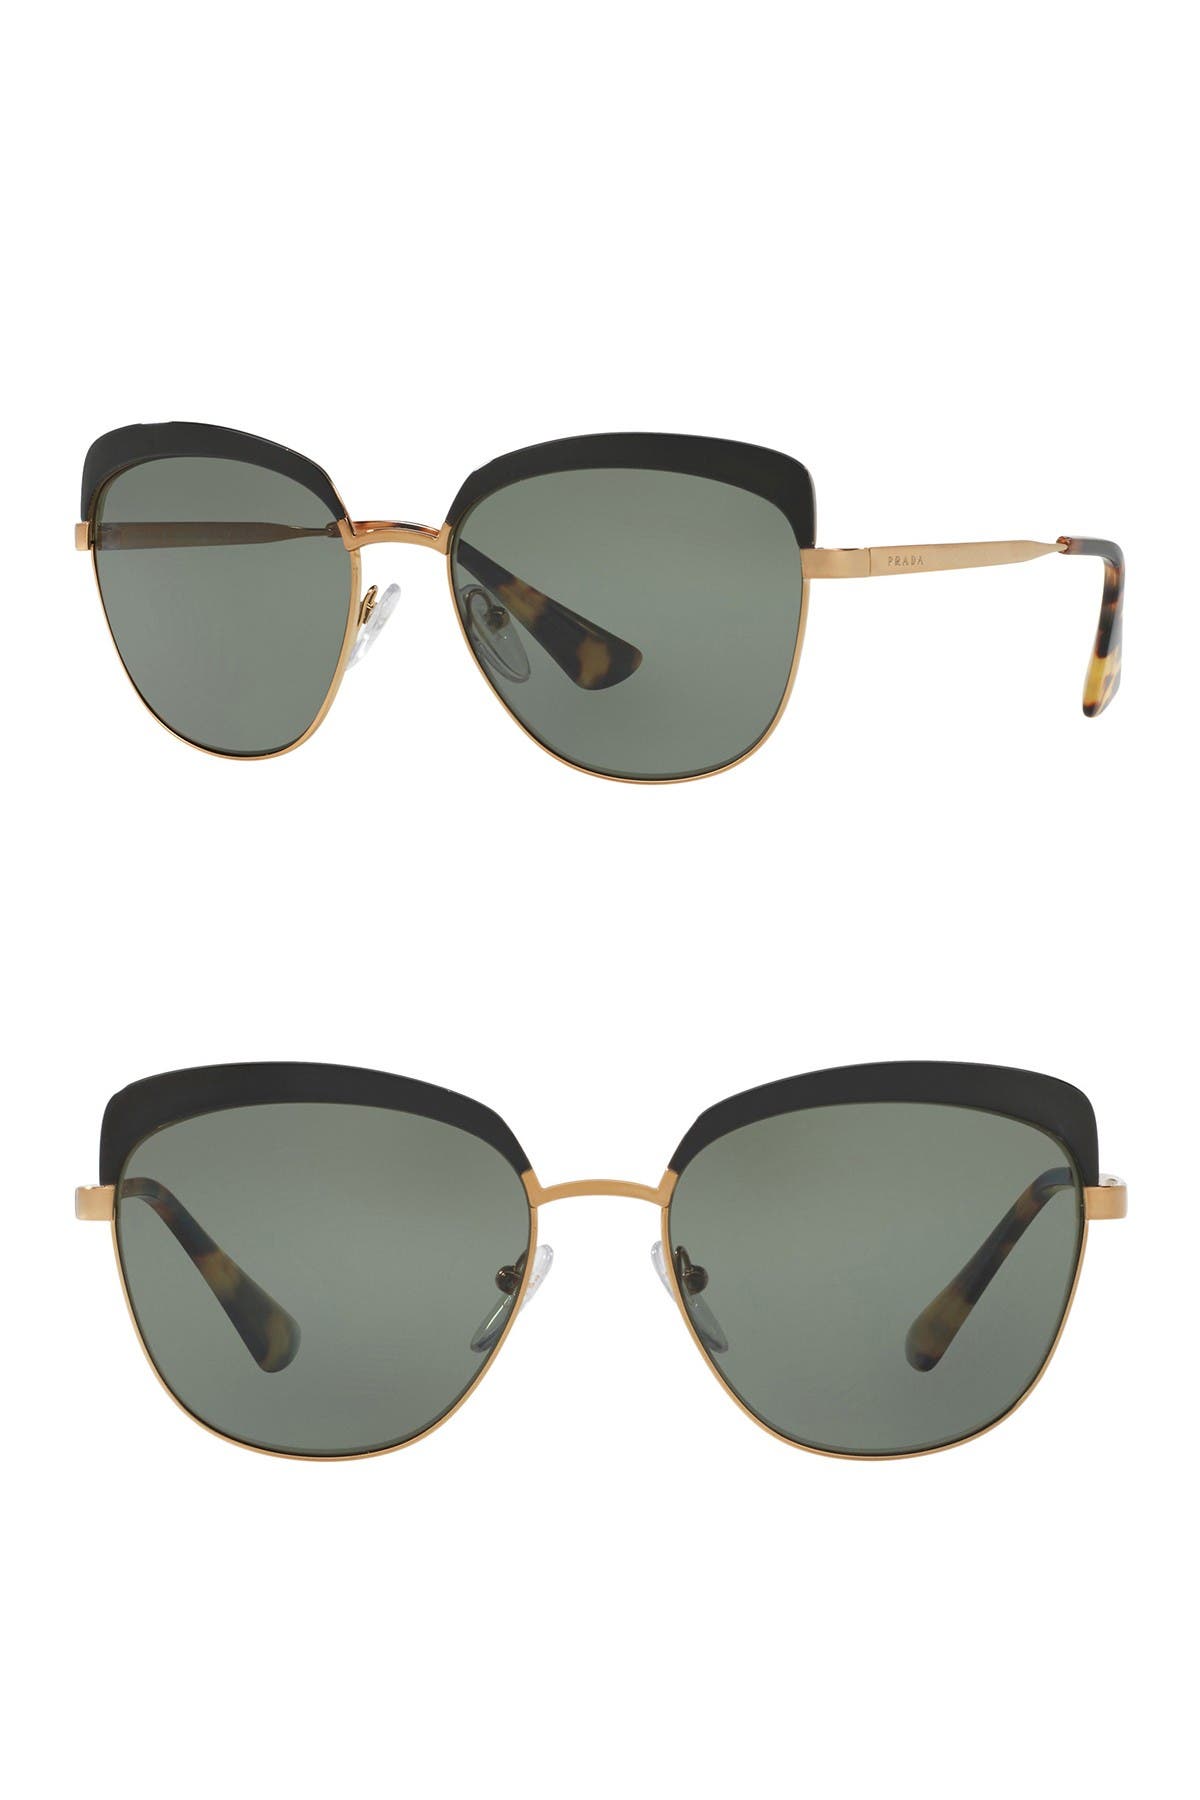 prada square aviator sunglasses